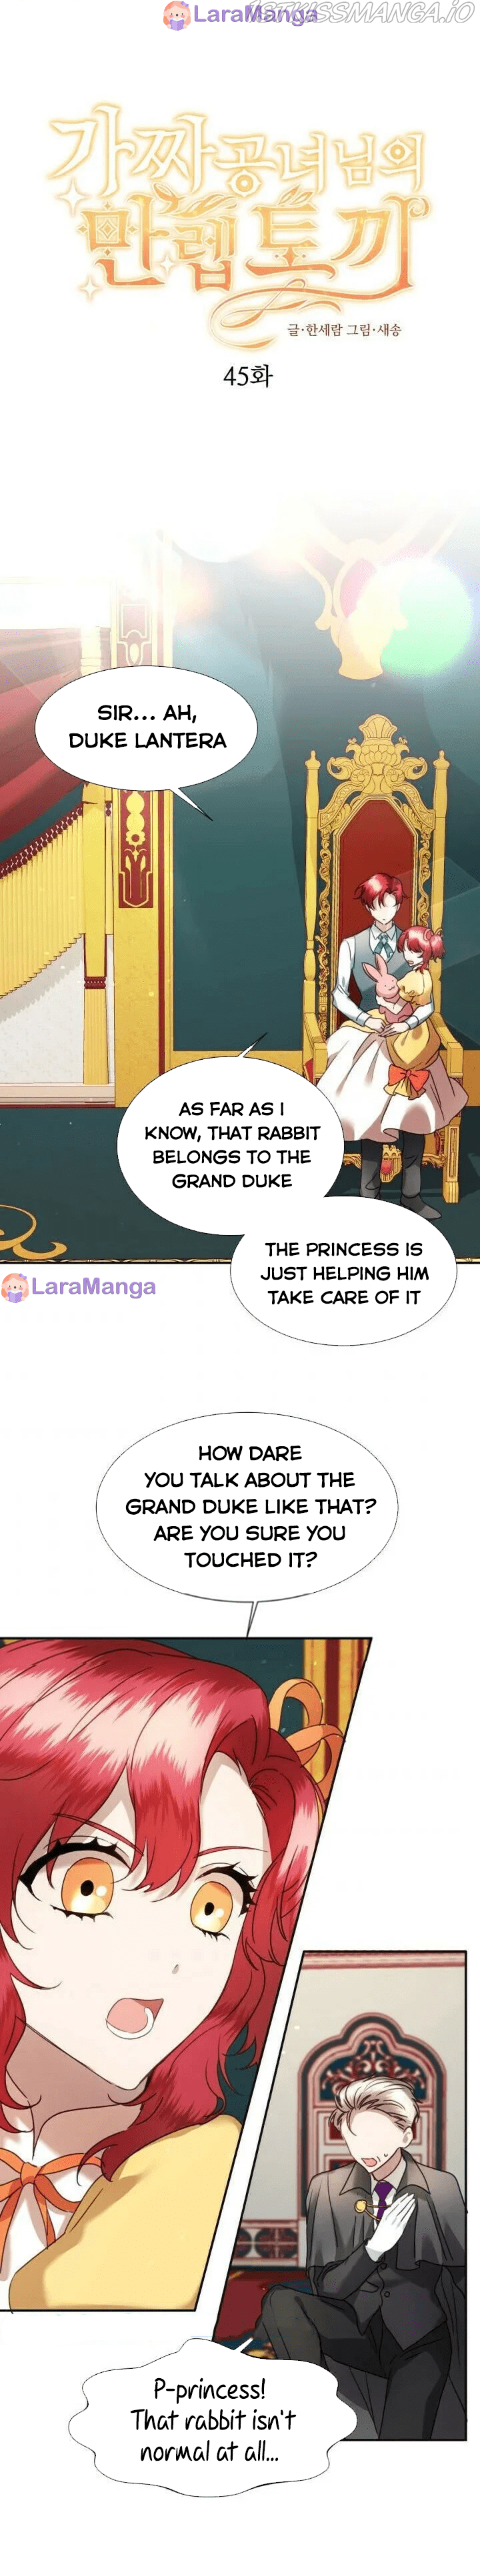 The Fake Princess’ Op Bunny - Page 1